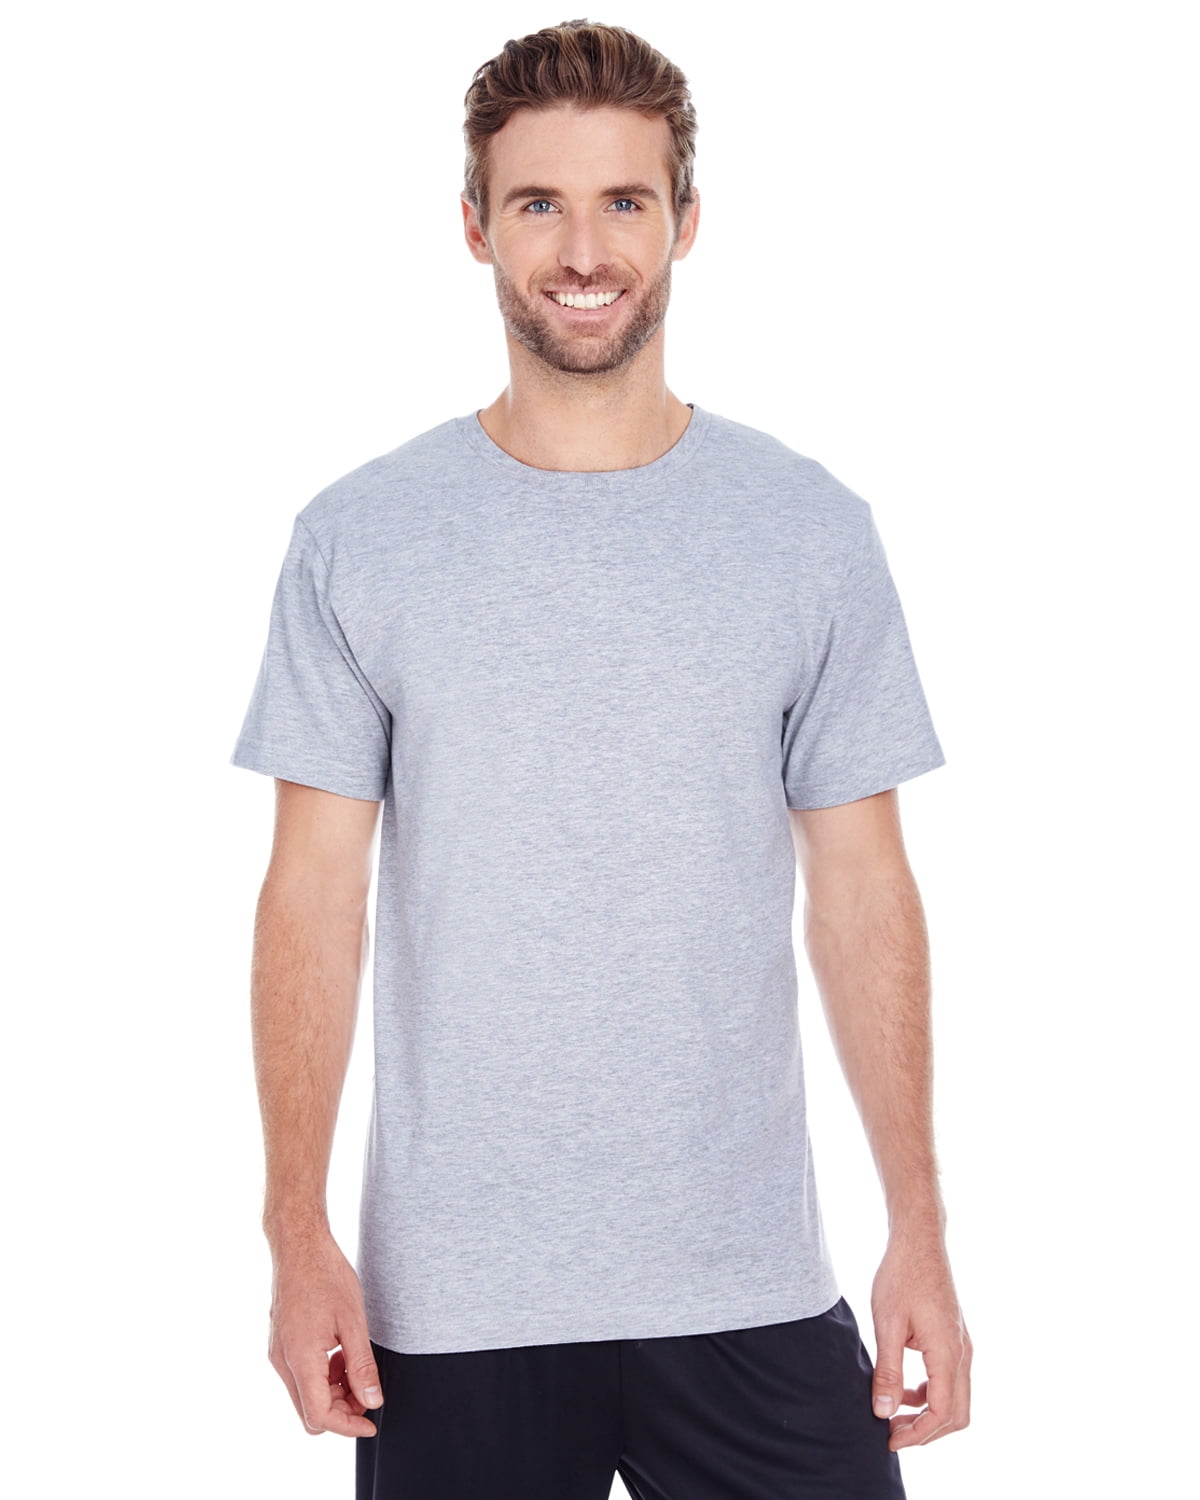 LAT Apparel - The LAT Men's Premium Jersey T-Shirt - HEATHER - M ...